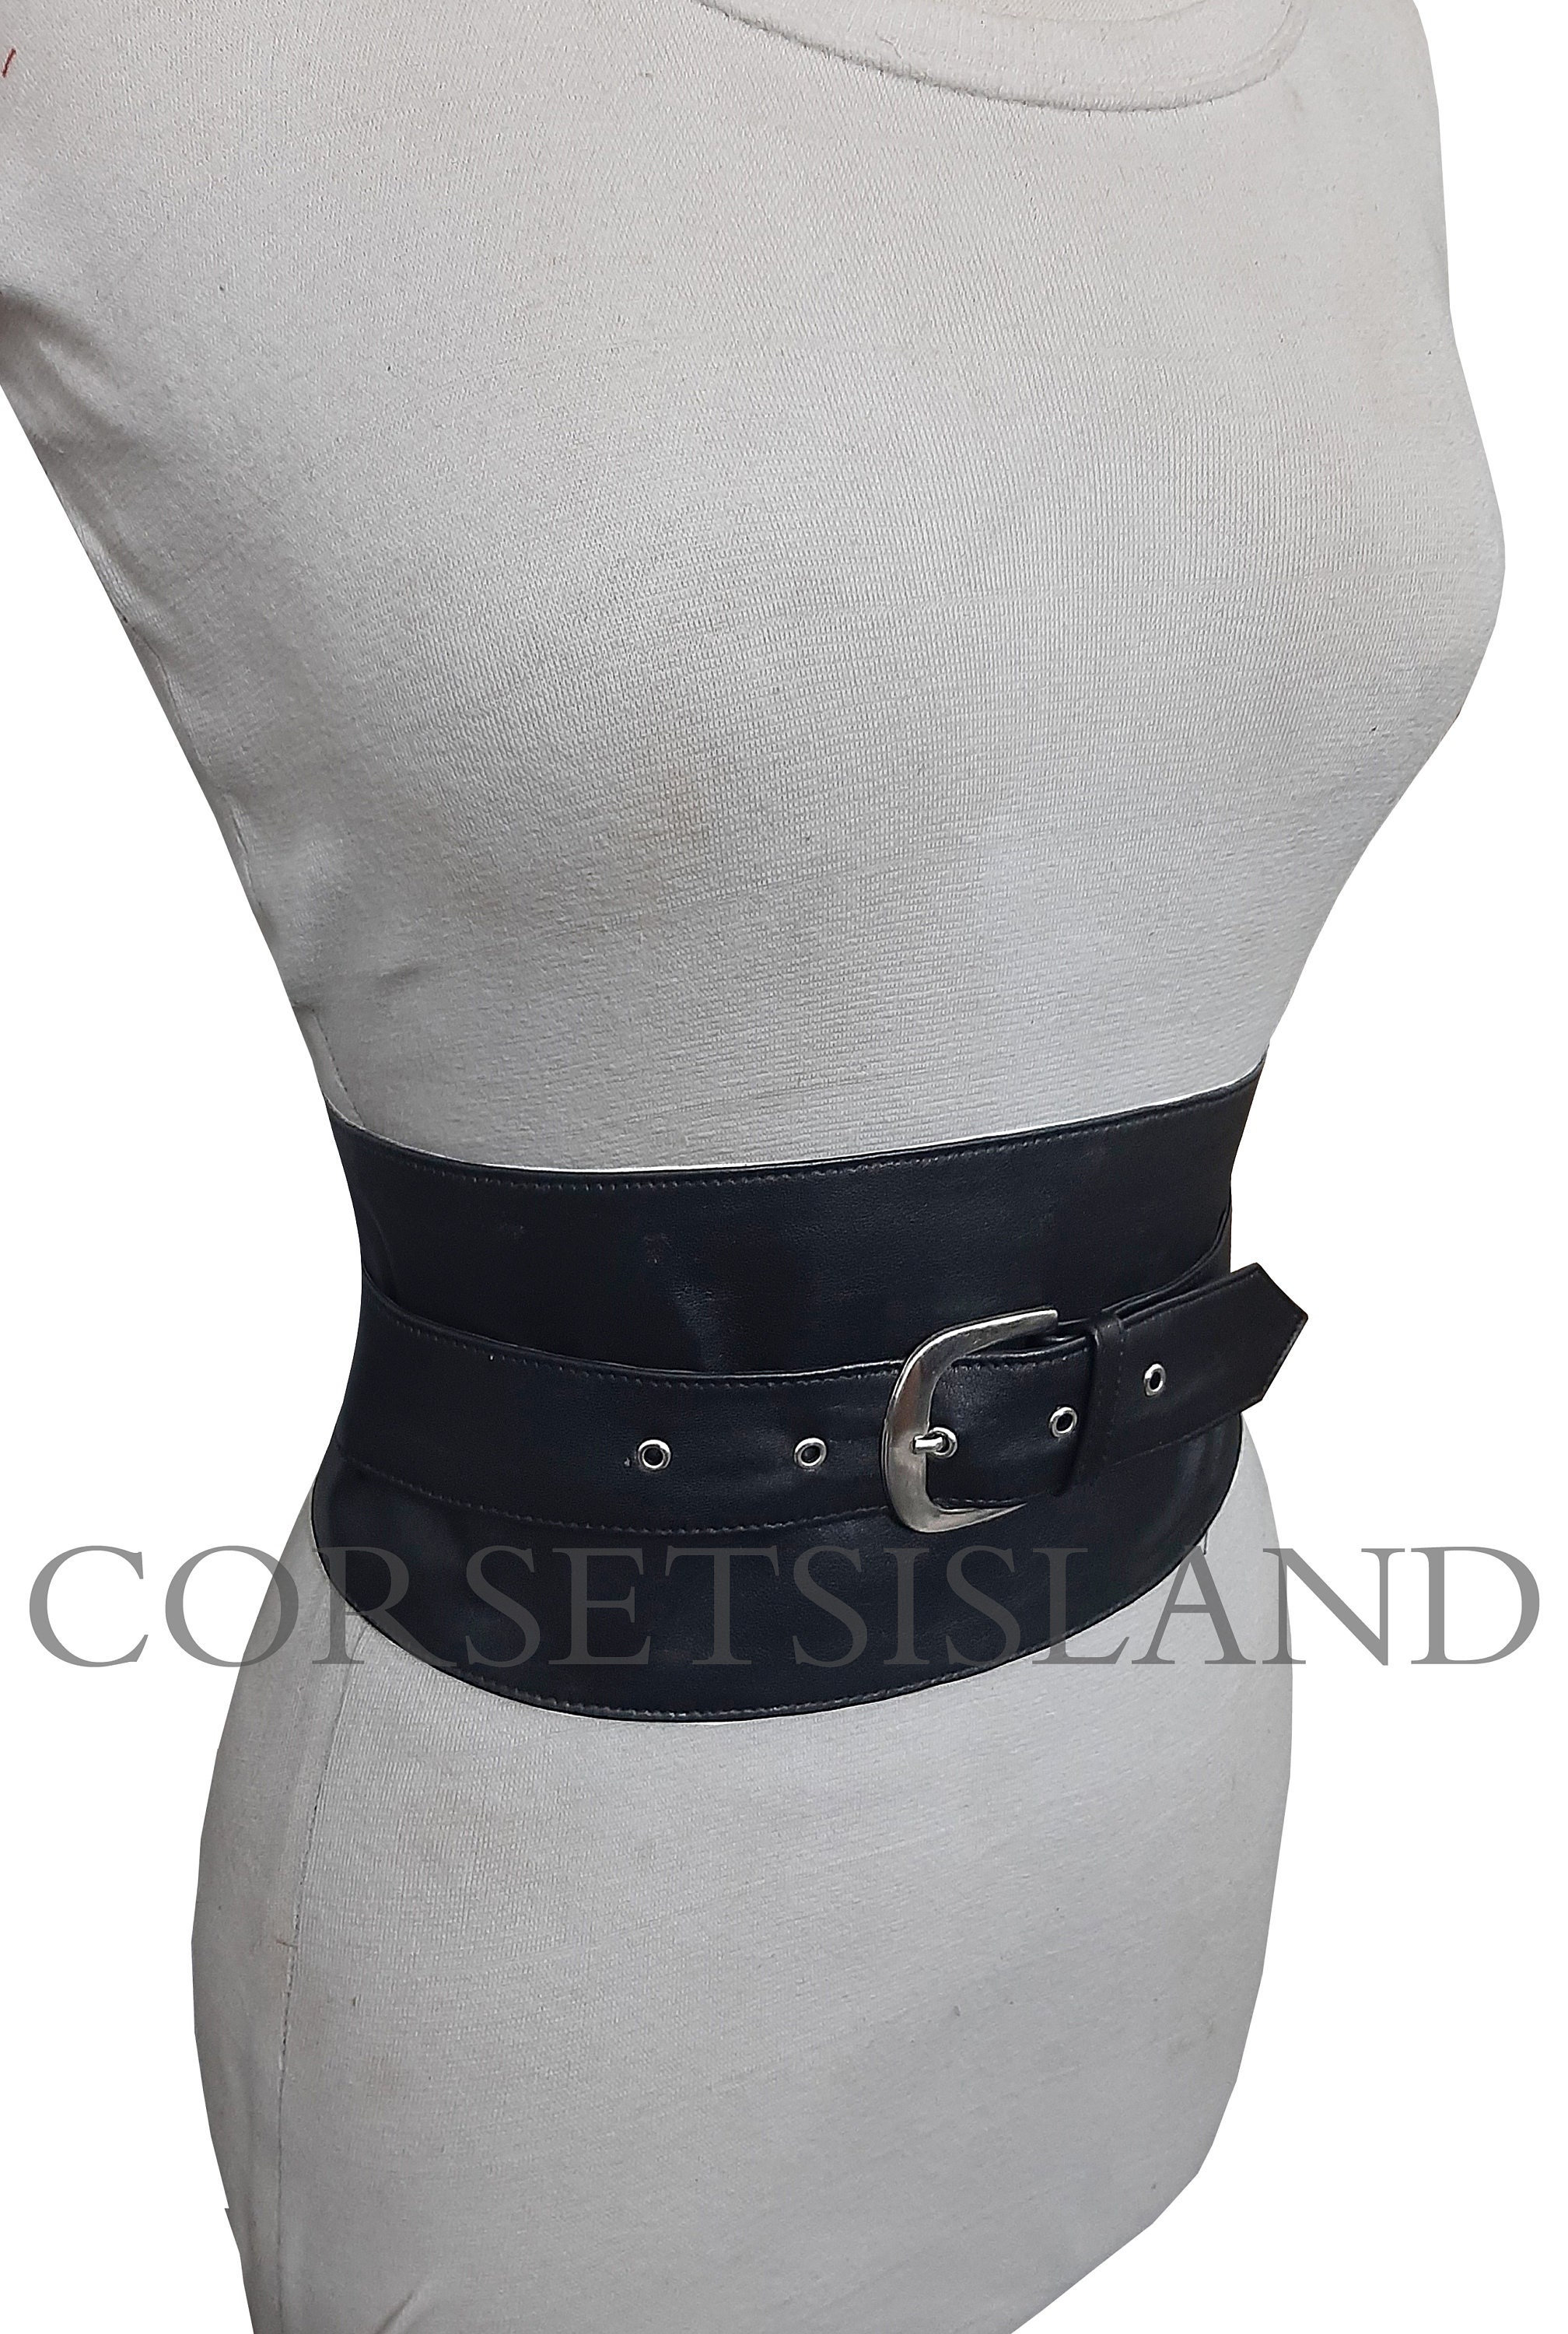 Women's Genuine Black Leather Obi Sash Tie Wrap Corset Harness Waist  Cincher Wide Elegant Buckle Belt 